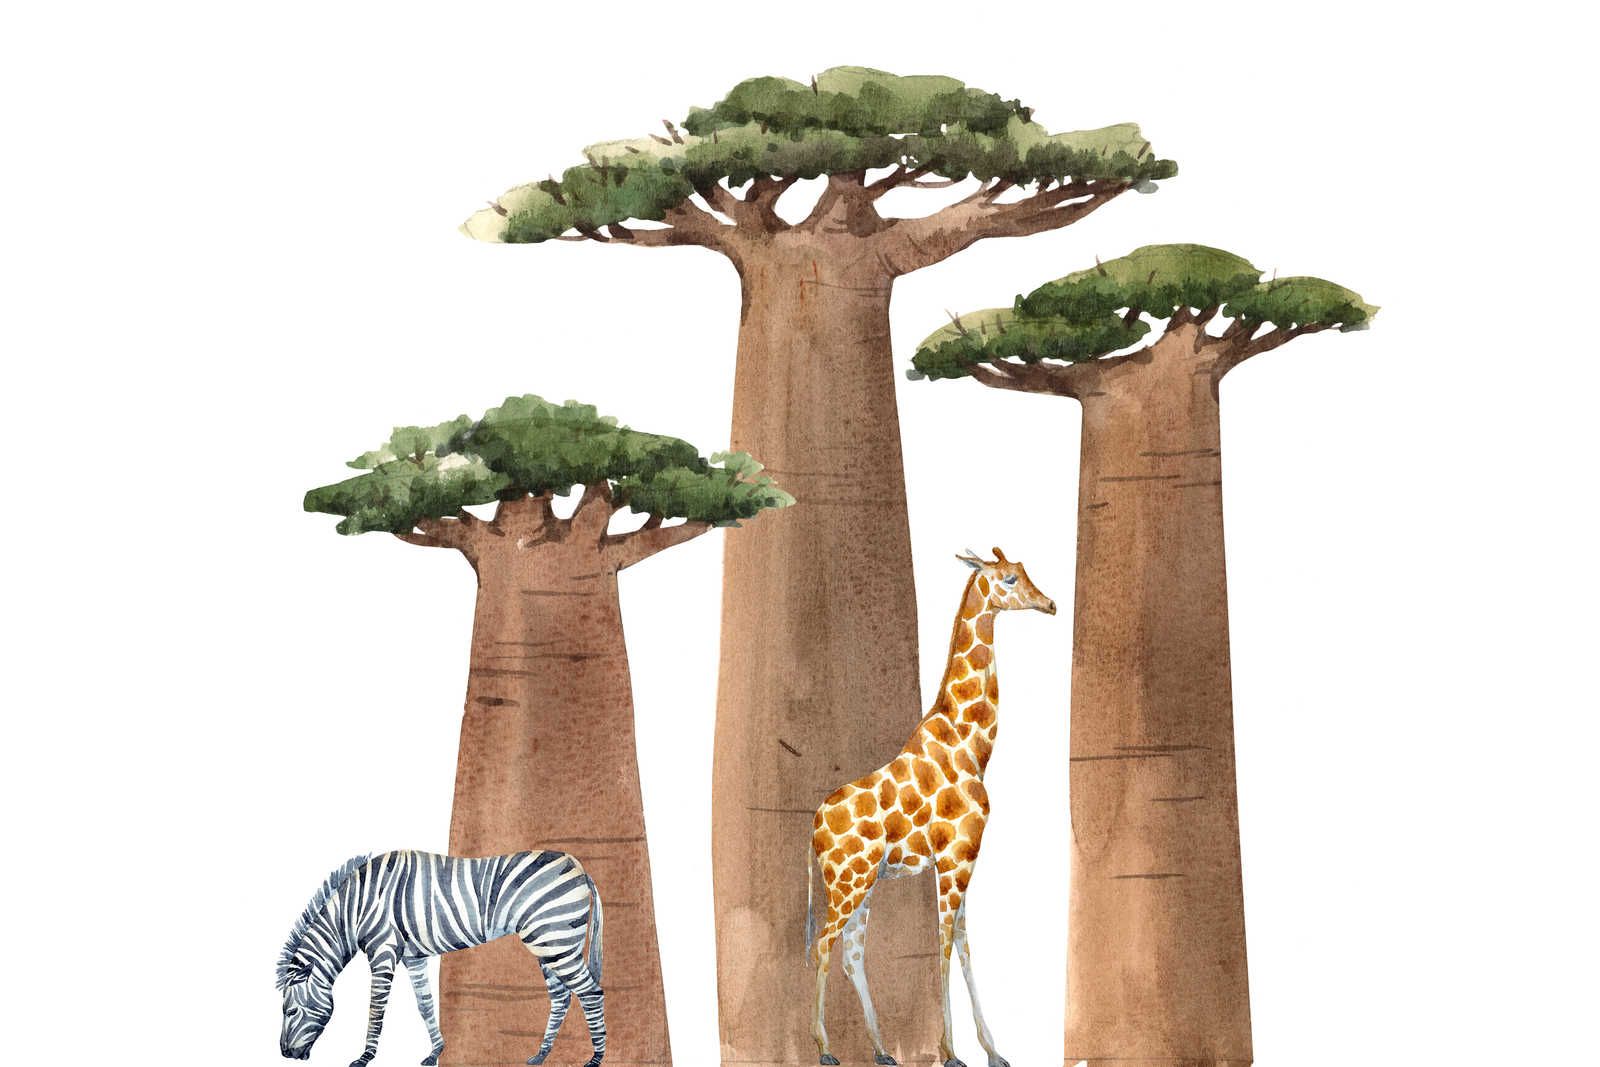             Canvas Savannah with Giraffe and Zebra - 120 cm x 80 cm
        